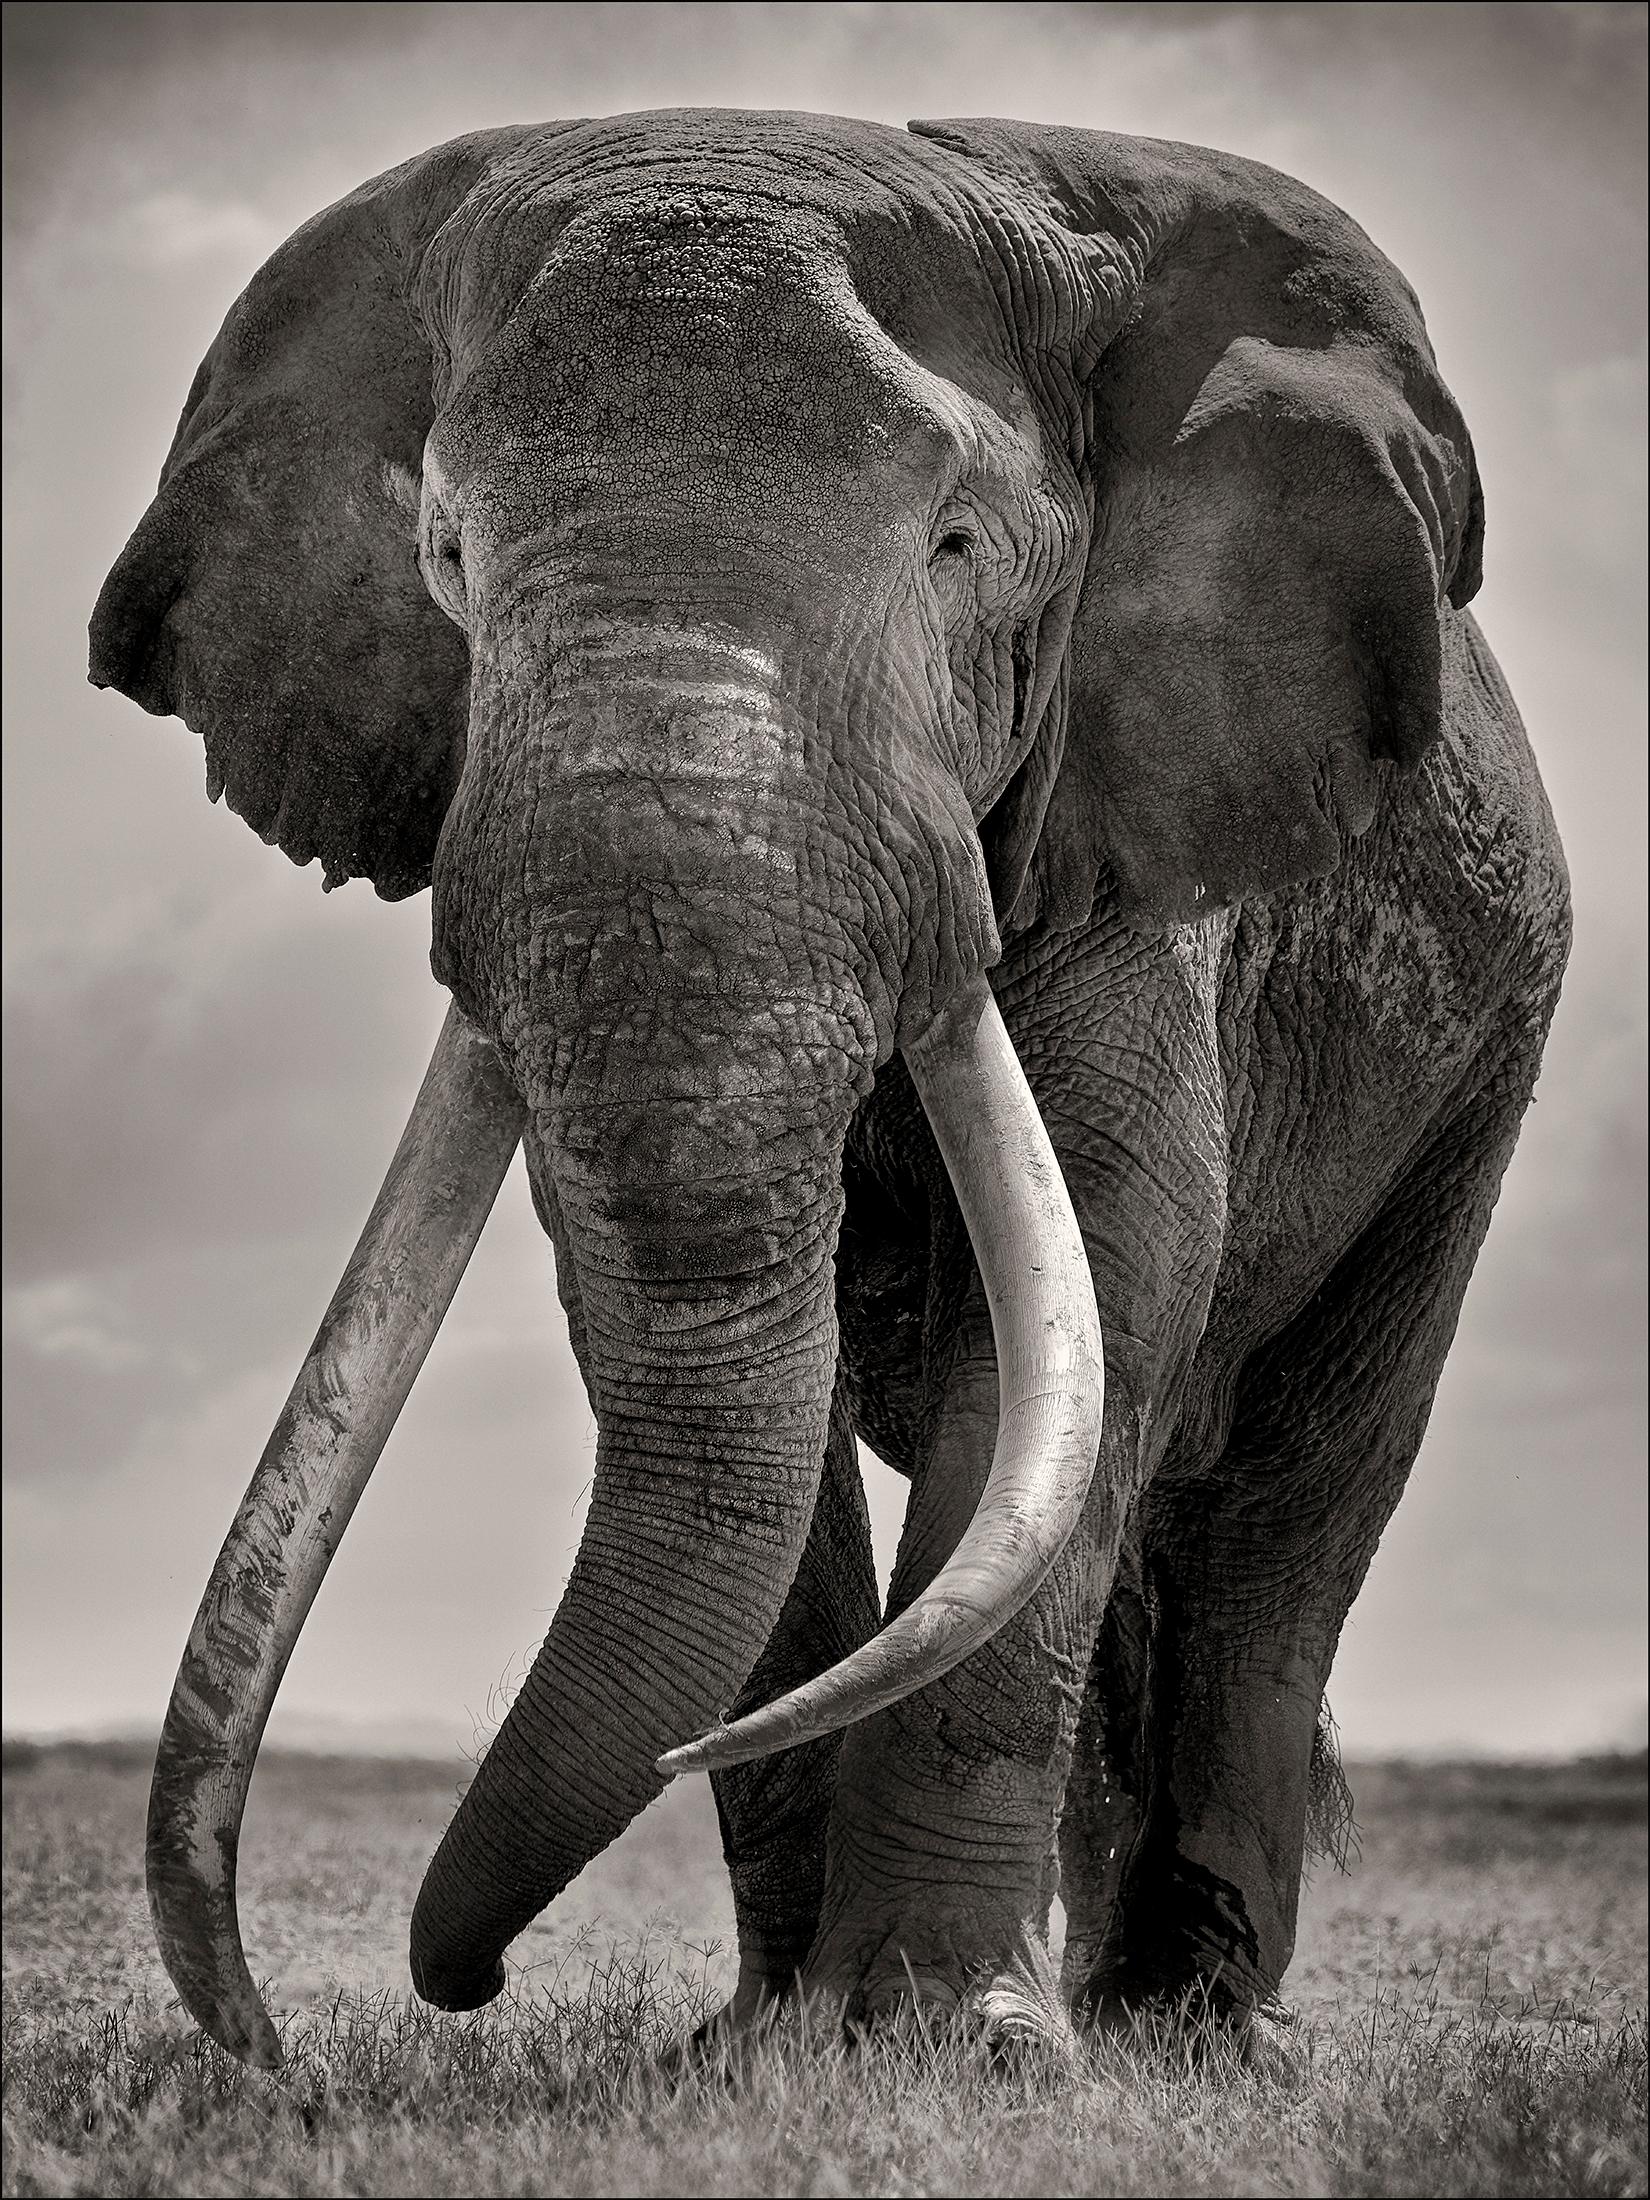 Joachim Schmeisser Portrait Photograph - Preserver of peace II, Kenya, Elephant, b&w photography